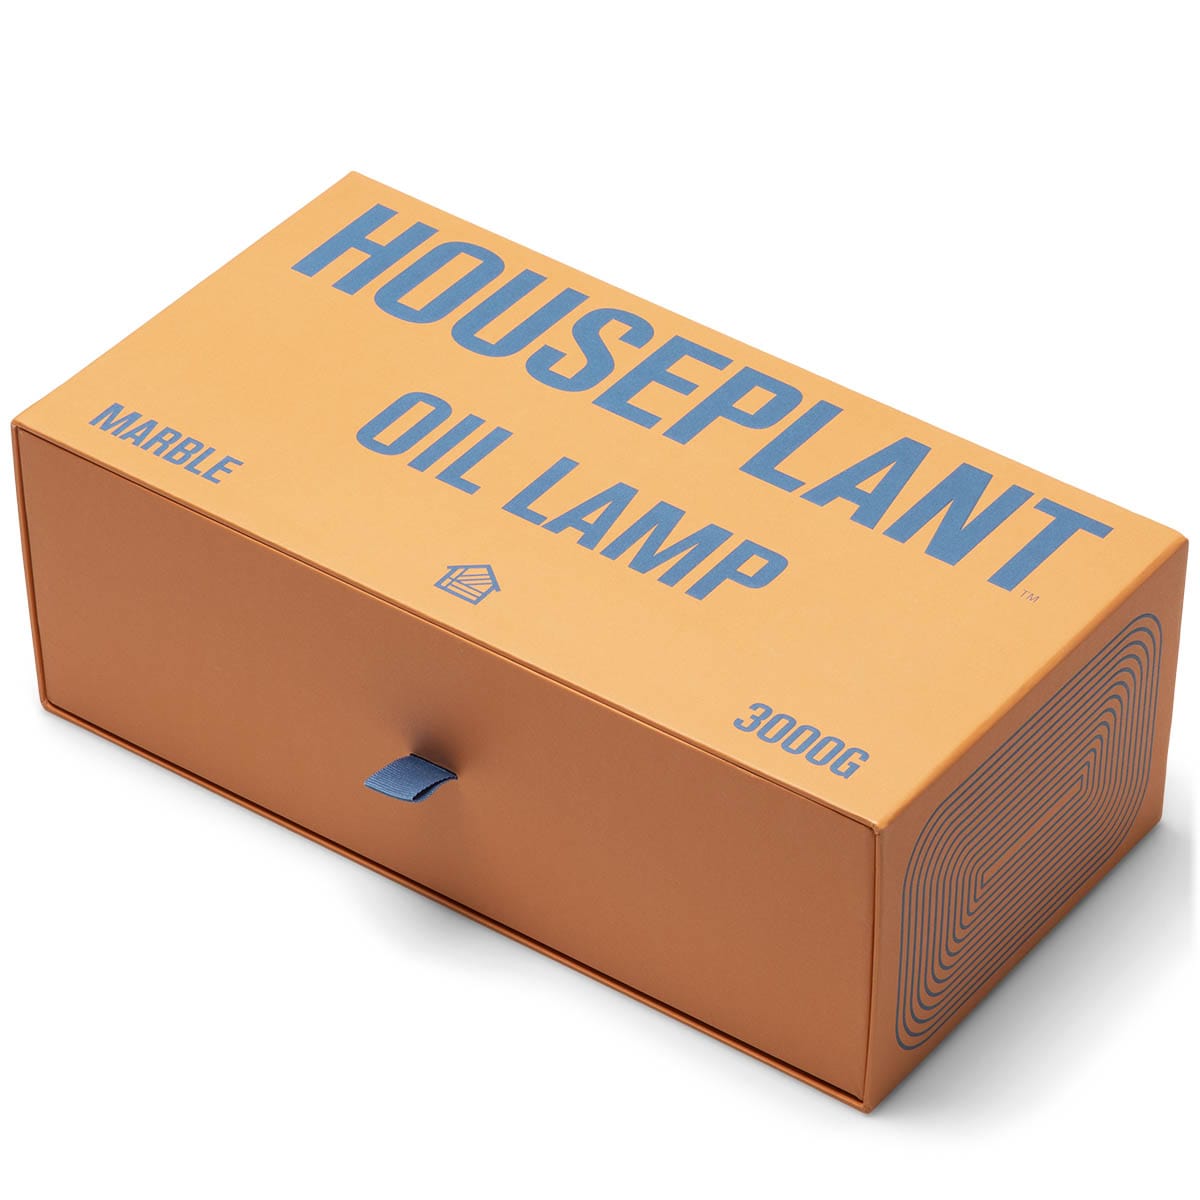 Houseplant Home WHITE / O/S OIL LAMP